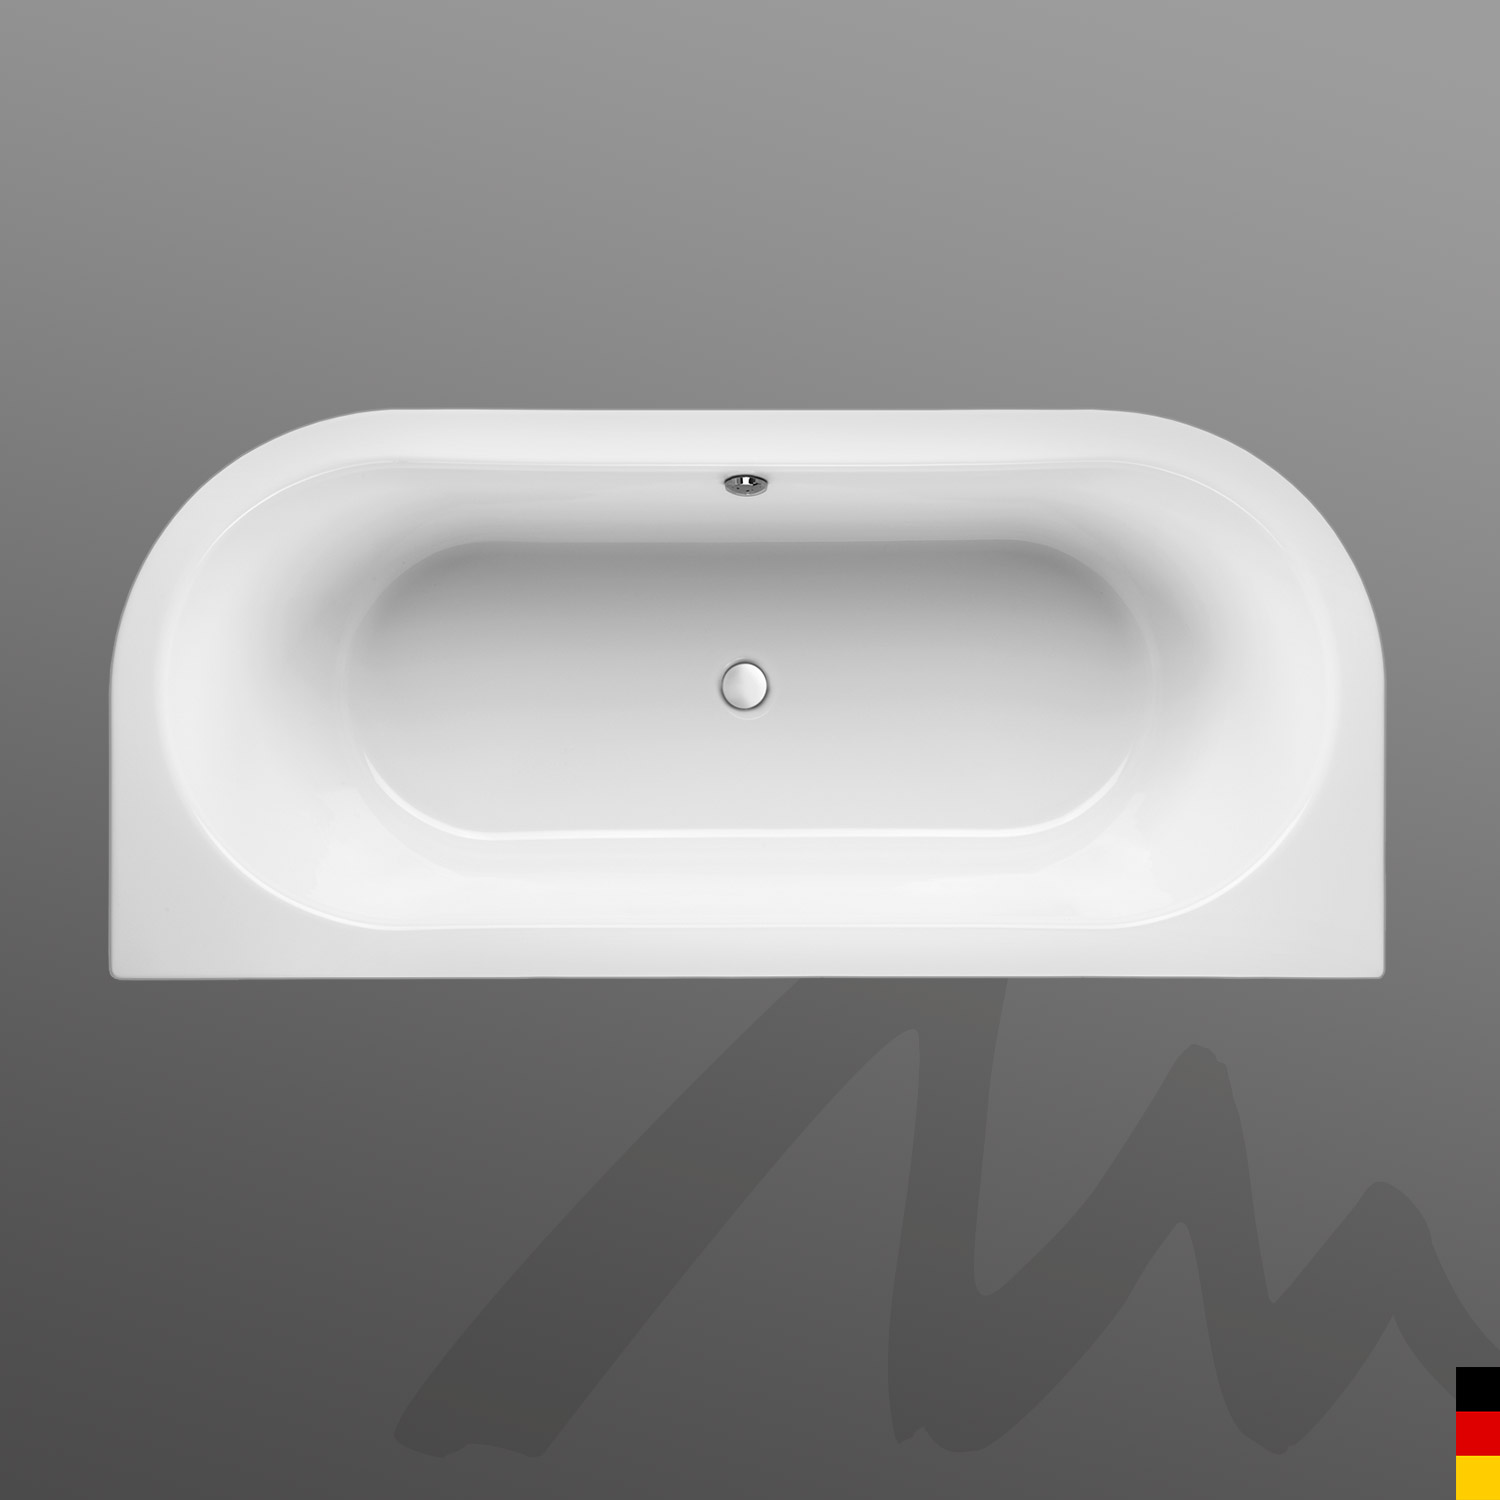 Mauersberger Badewanne Oval Primo 2 - 170/75 duo  170x75x44  Farbe: weiß